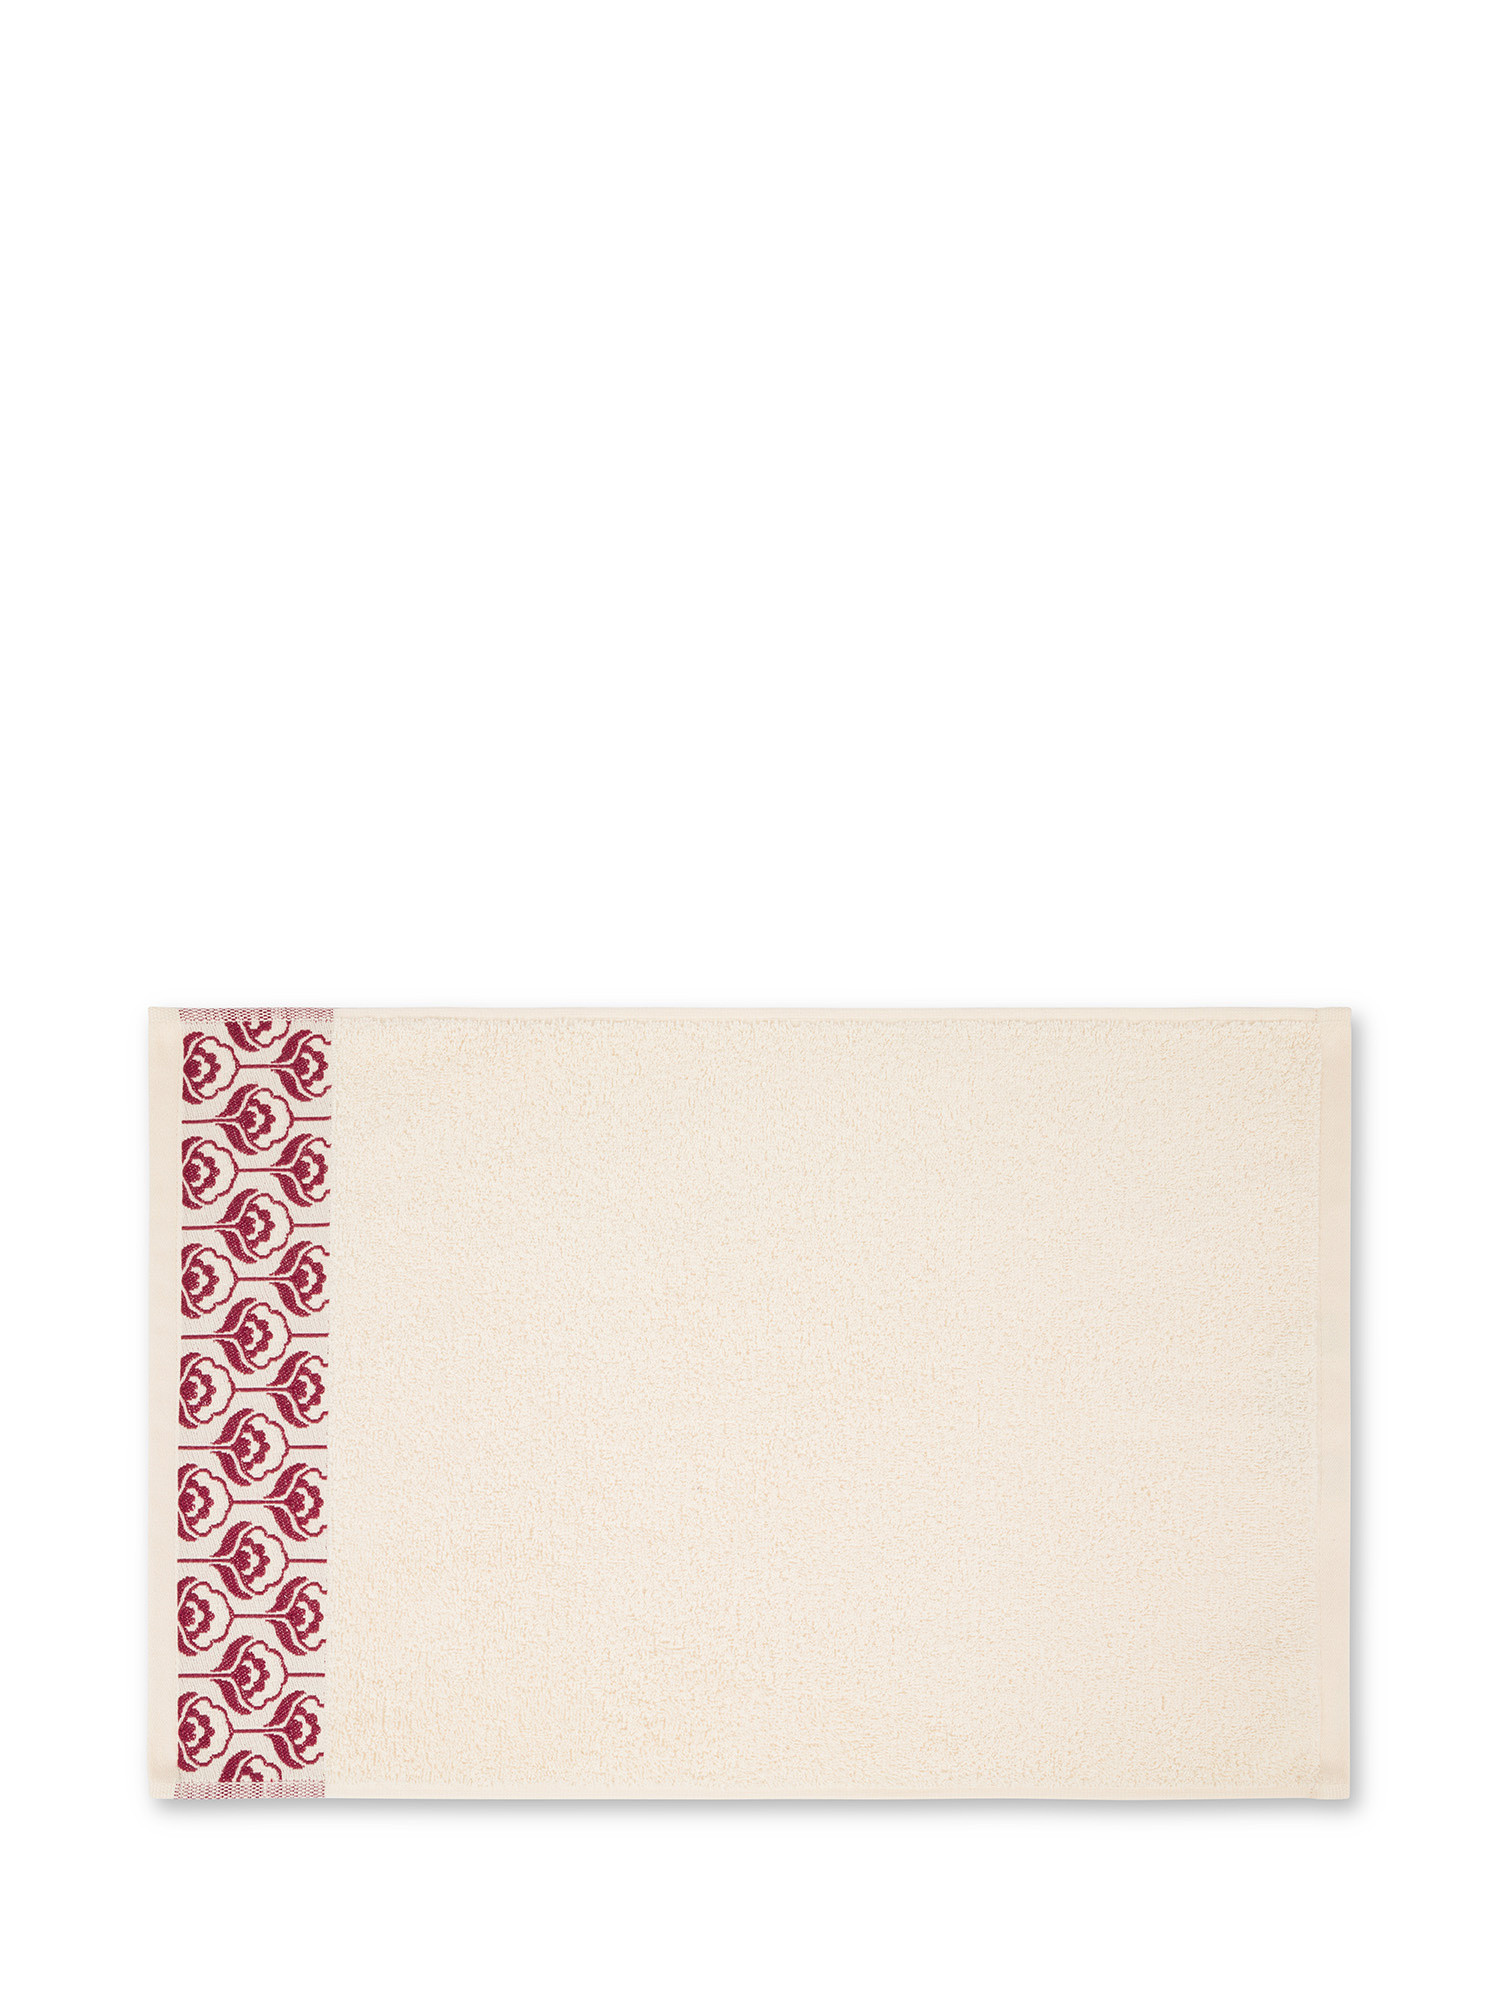 Asciugamano spugna di cotone motivo floreale, Crema, large image number 1